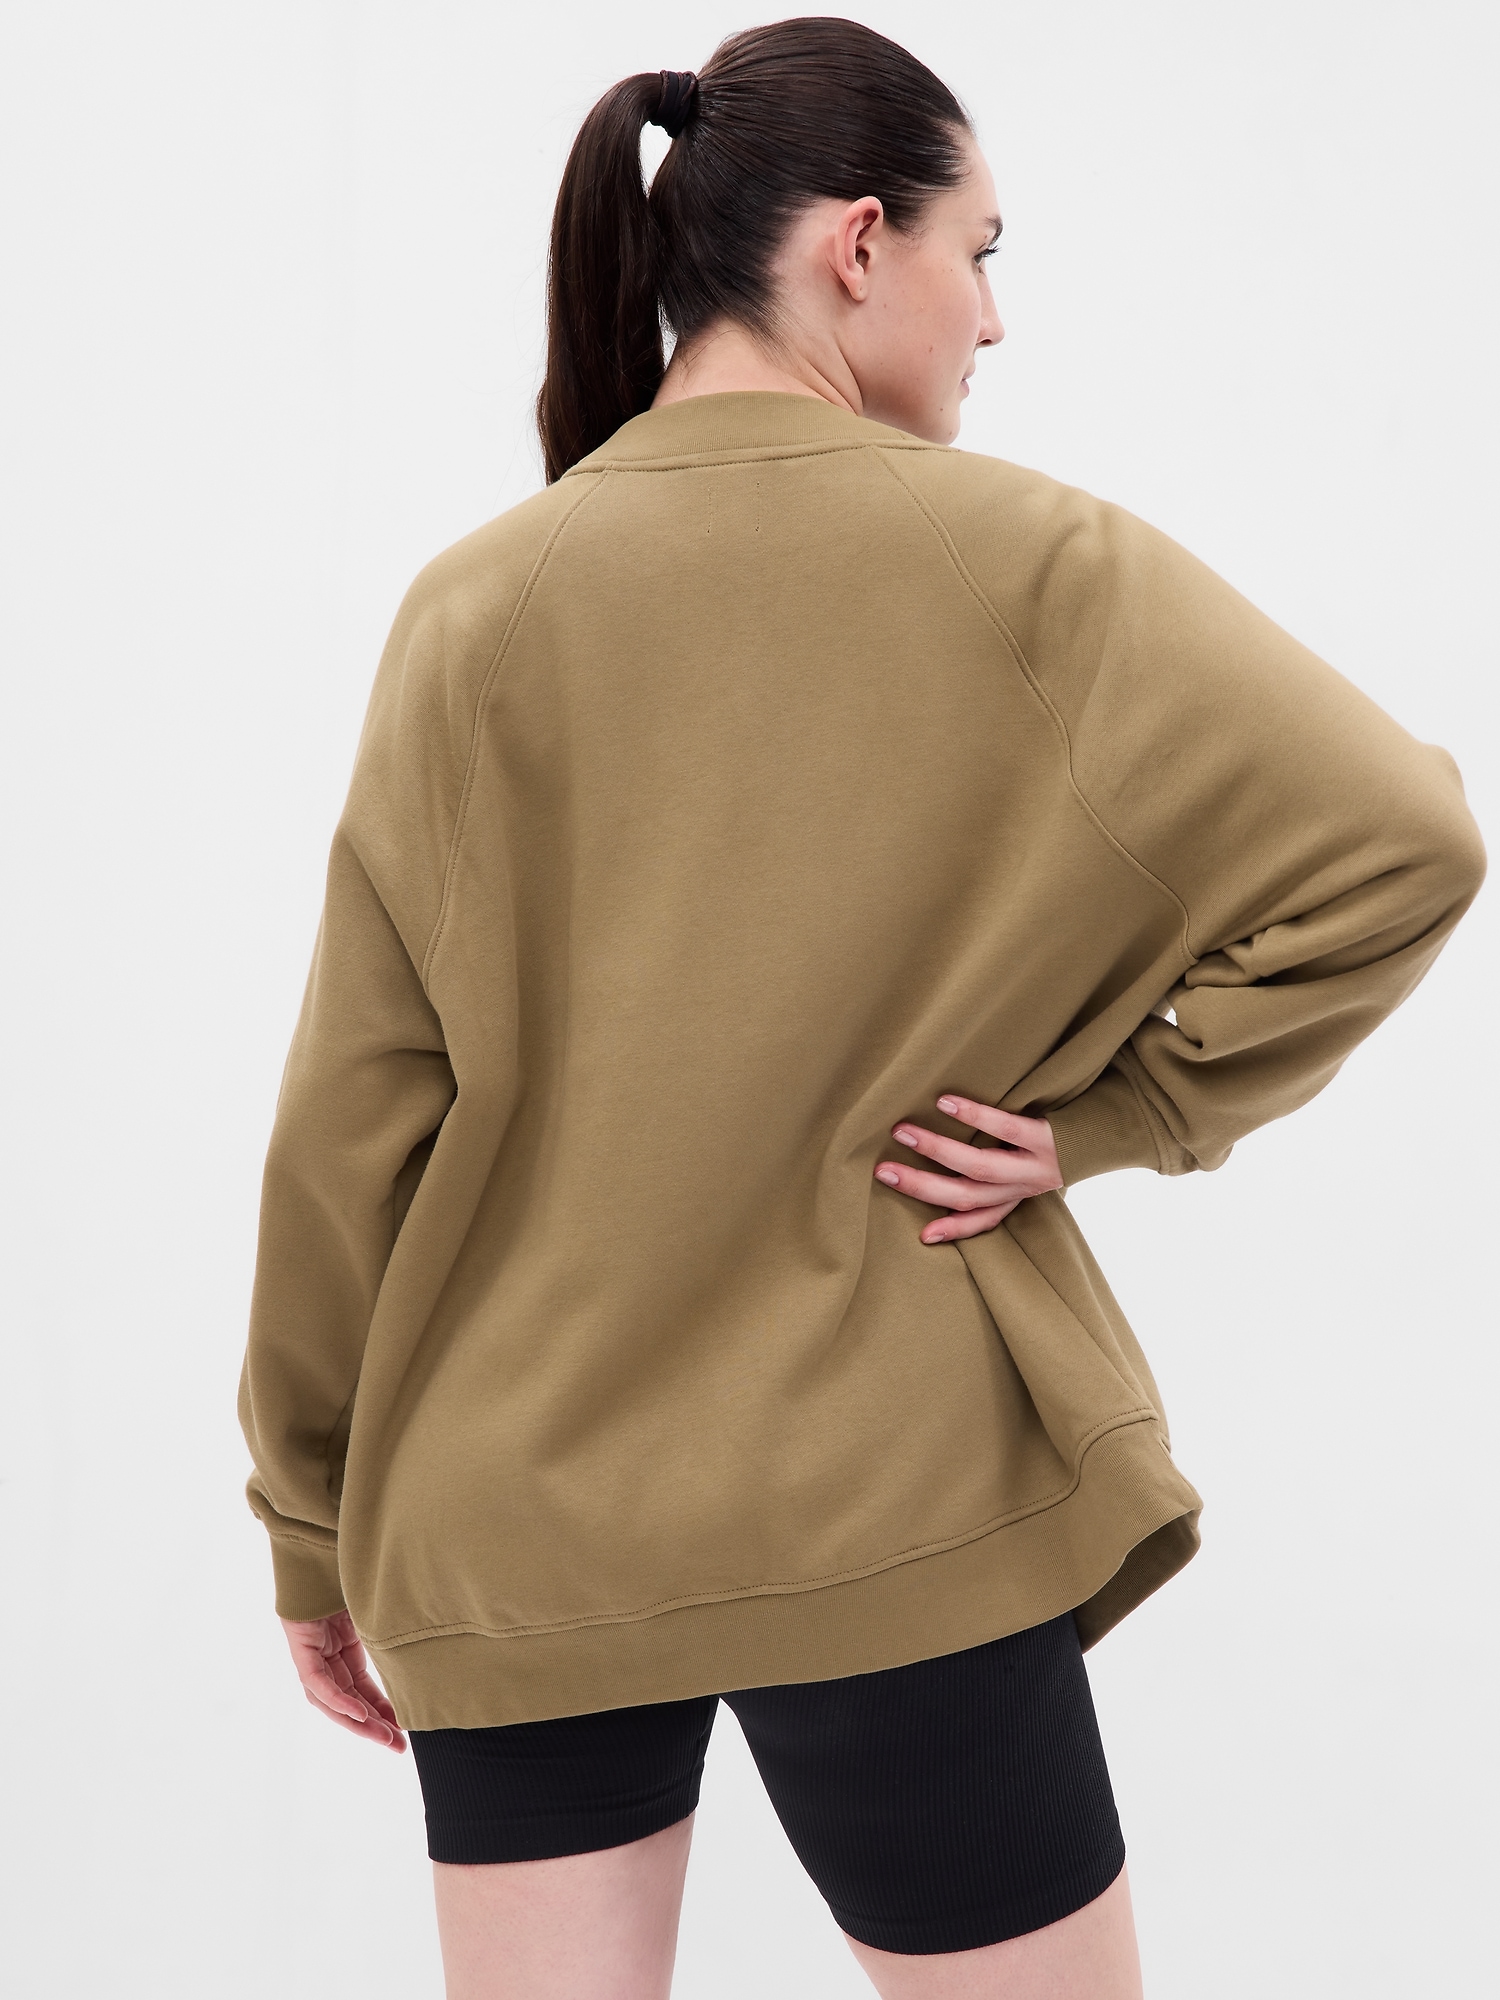 Vintage Soft Sweatshirt Cardigan | Gap